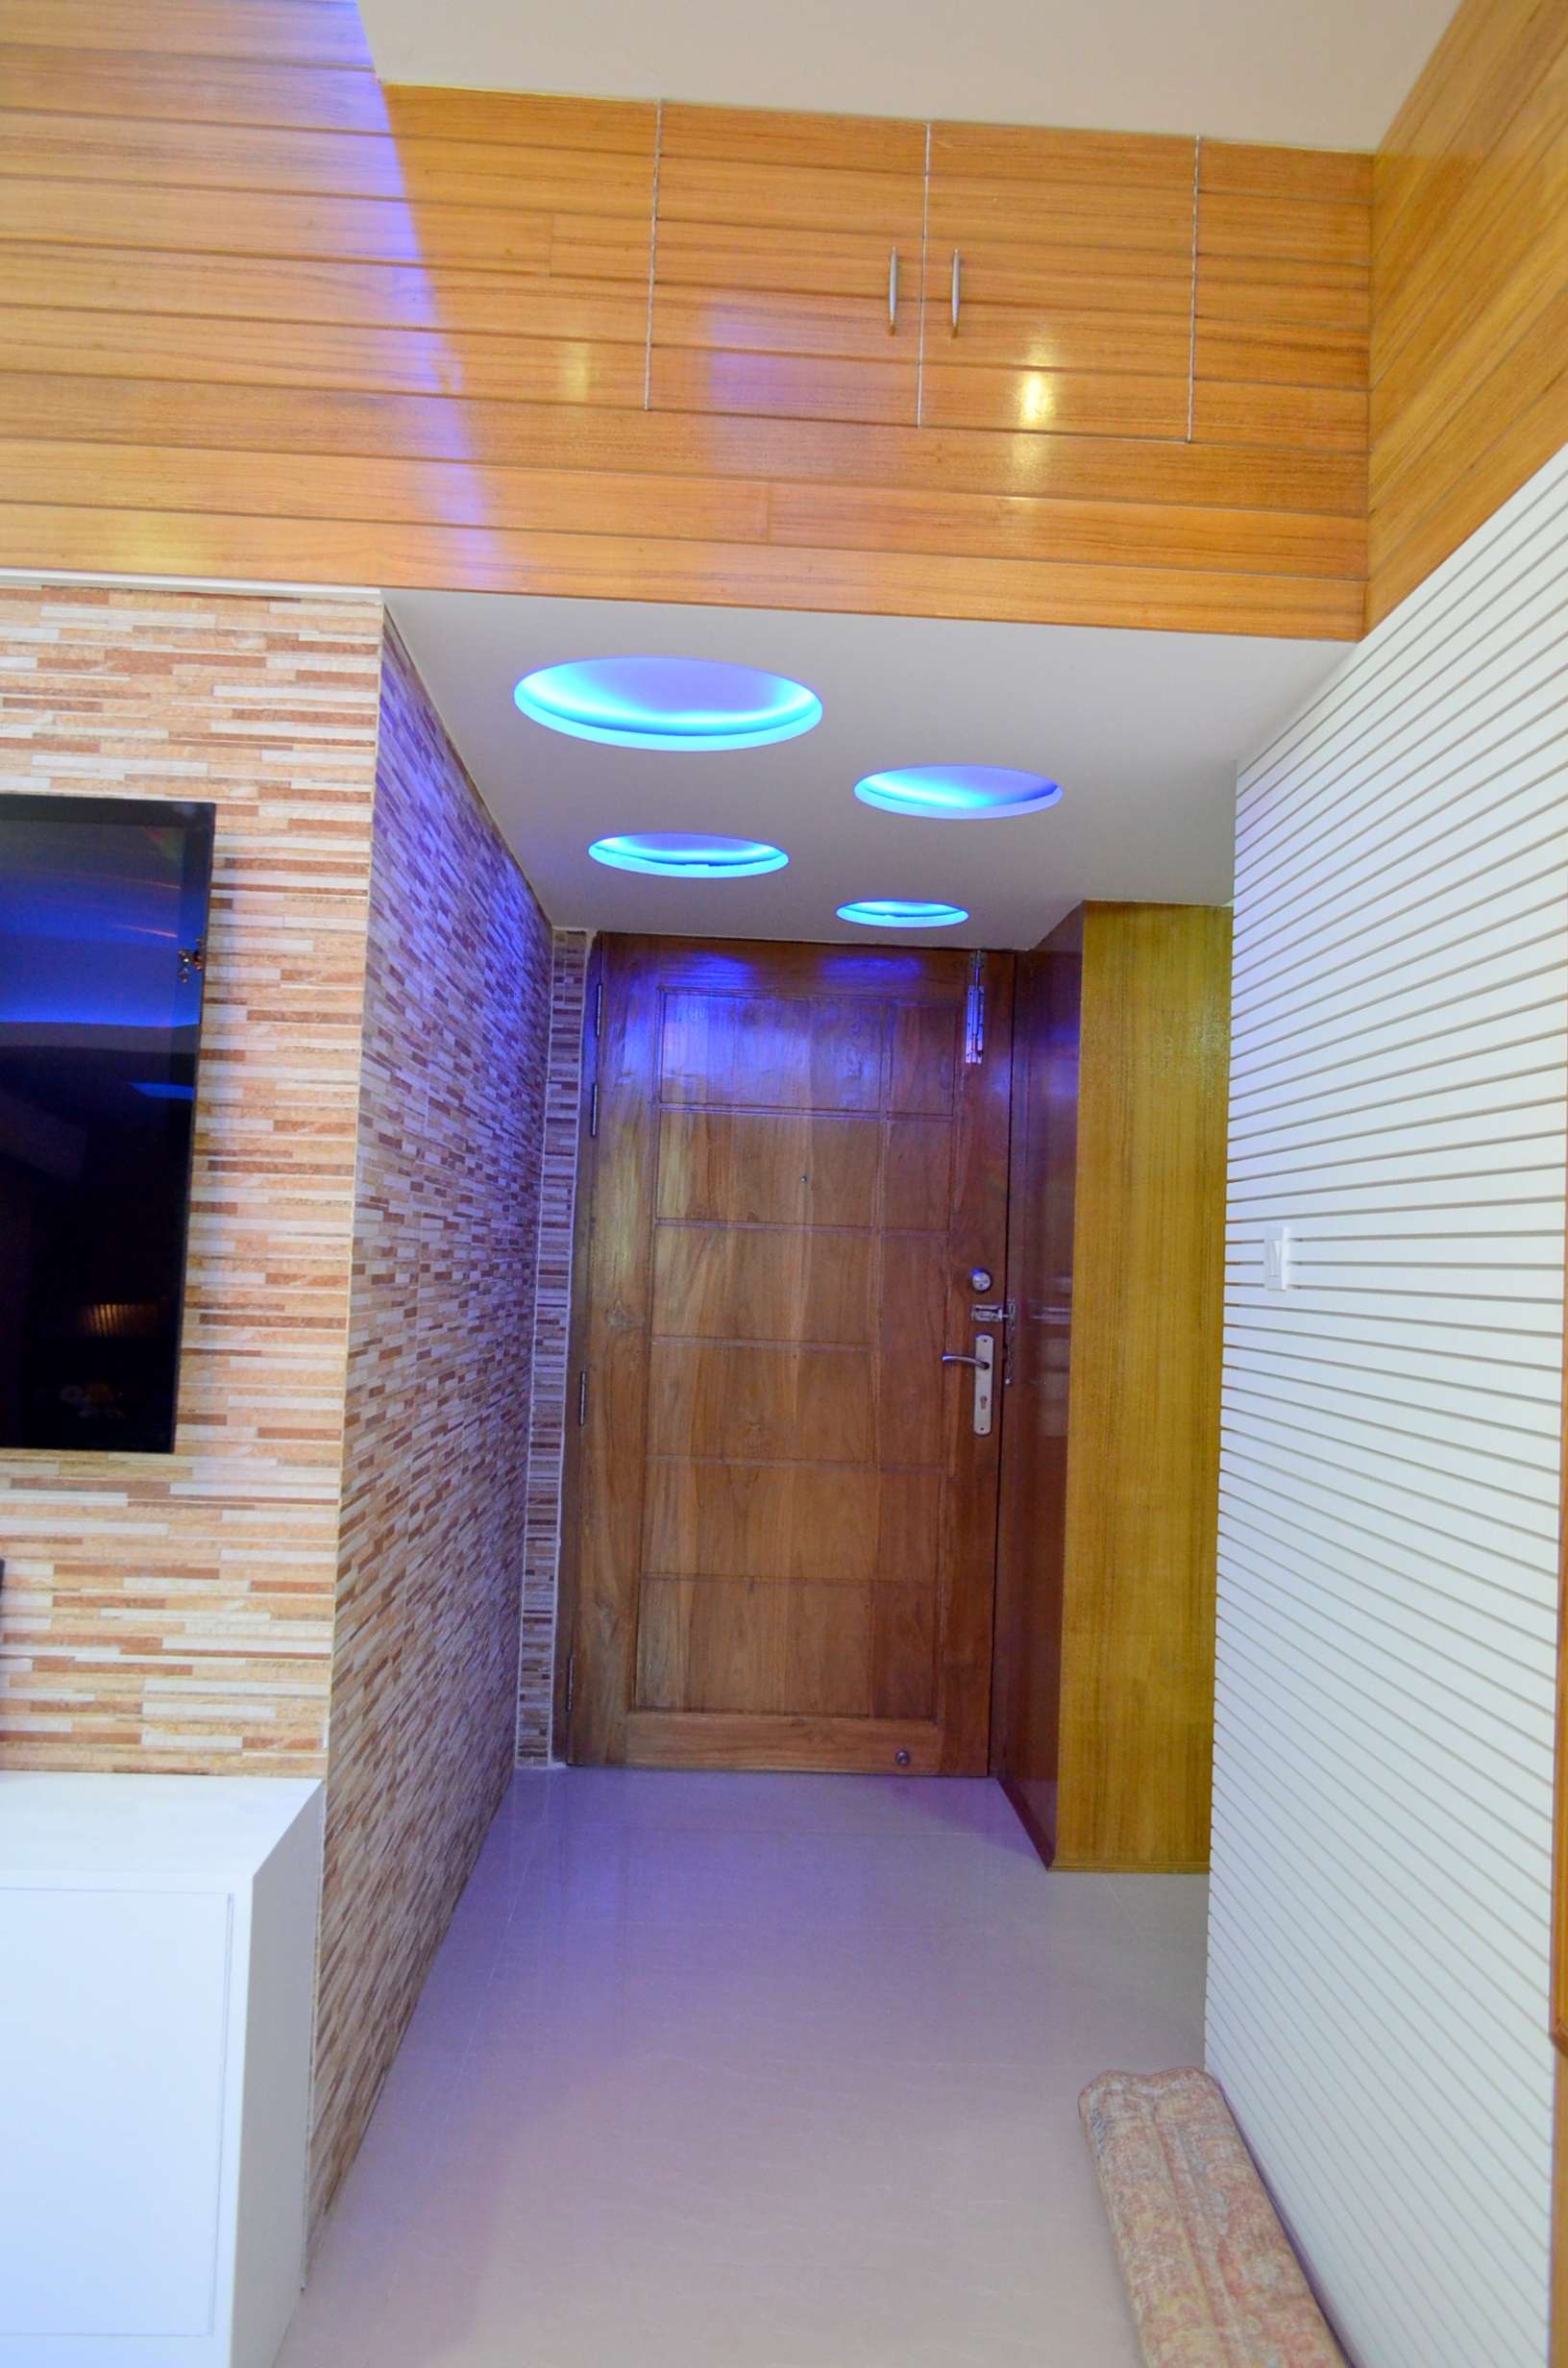 Masud Alam Dhanmondi Complete Project Foyer Interior Design (2)